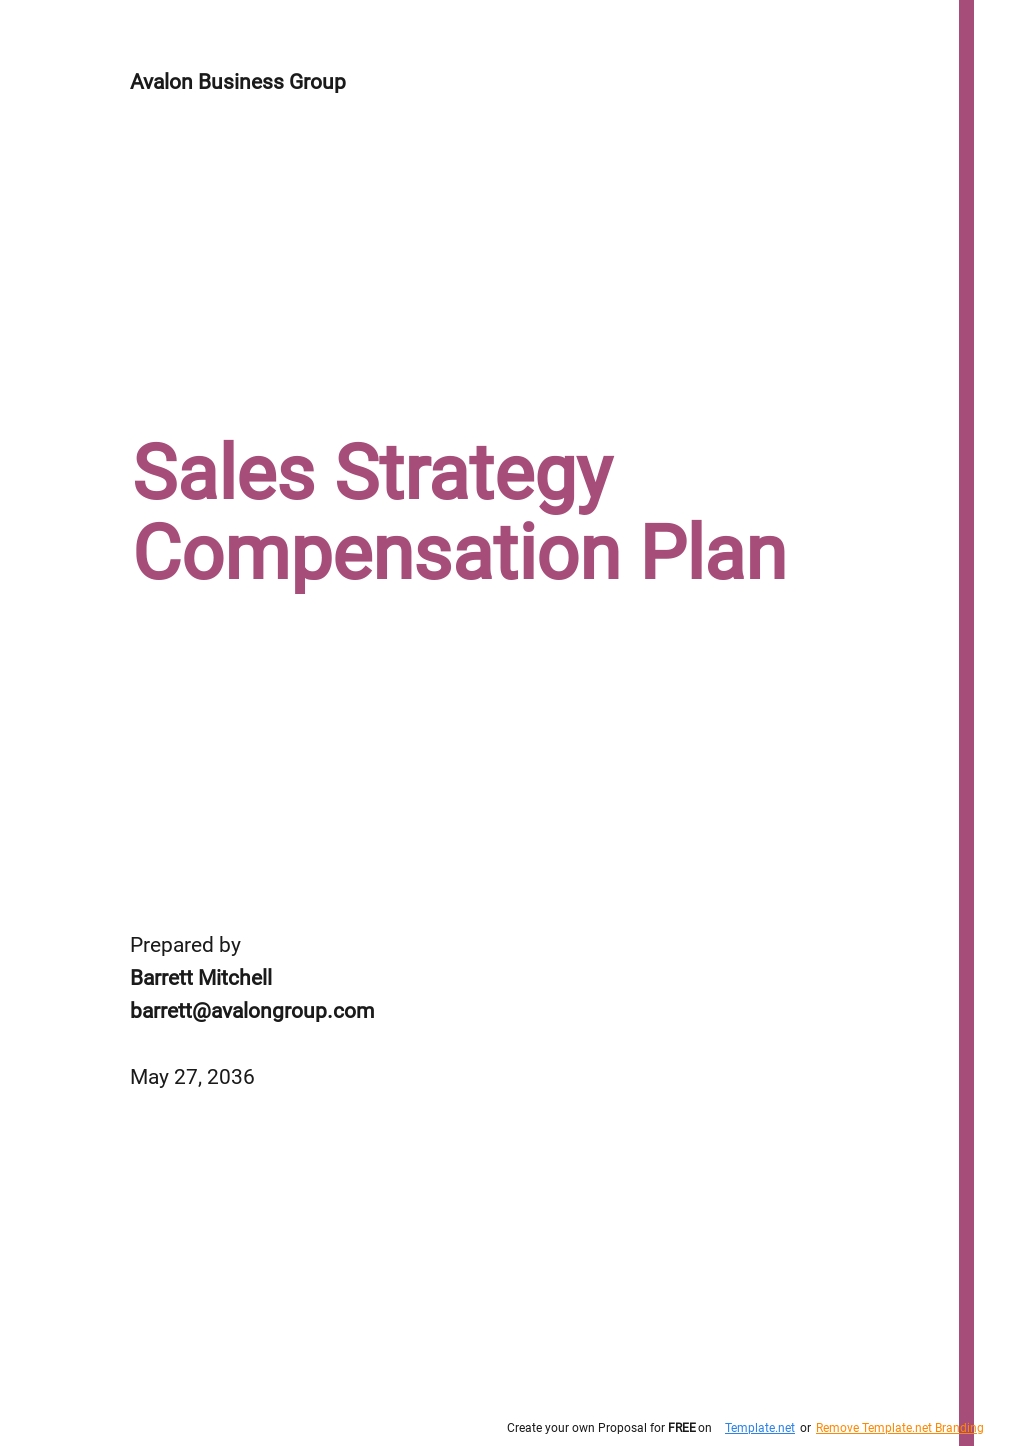 Sales Strategy Compensation Plan Template.jpe